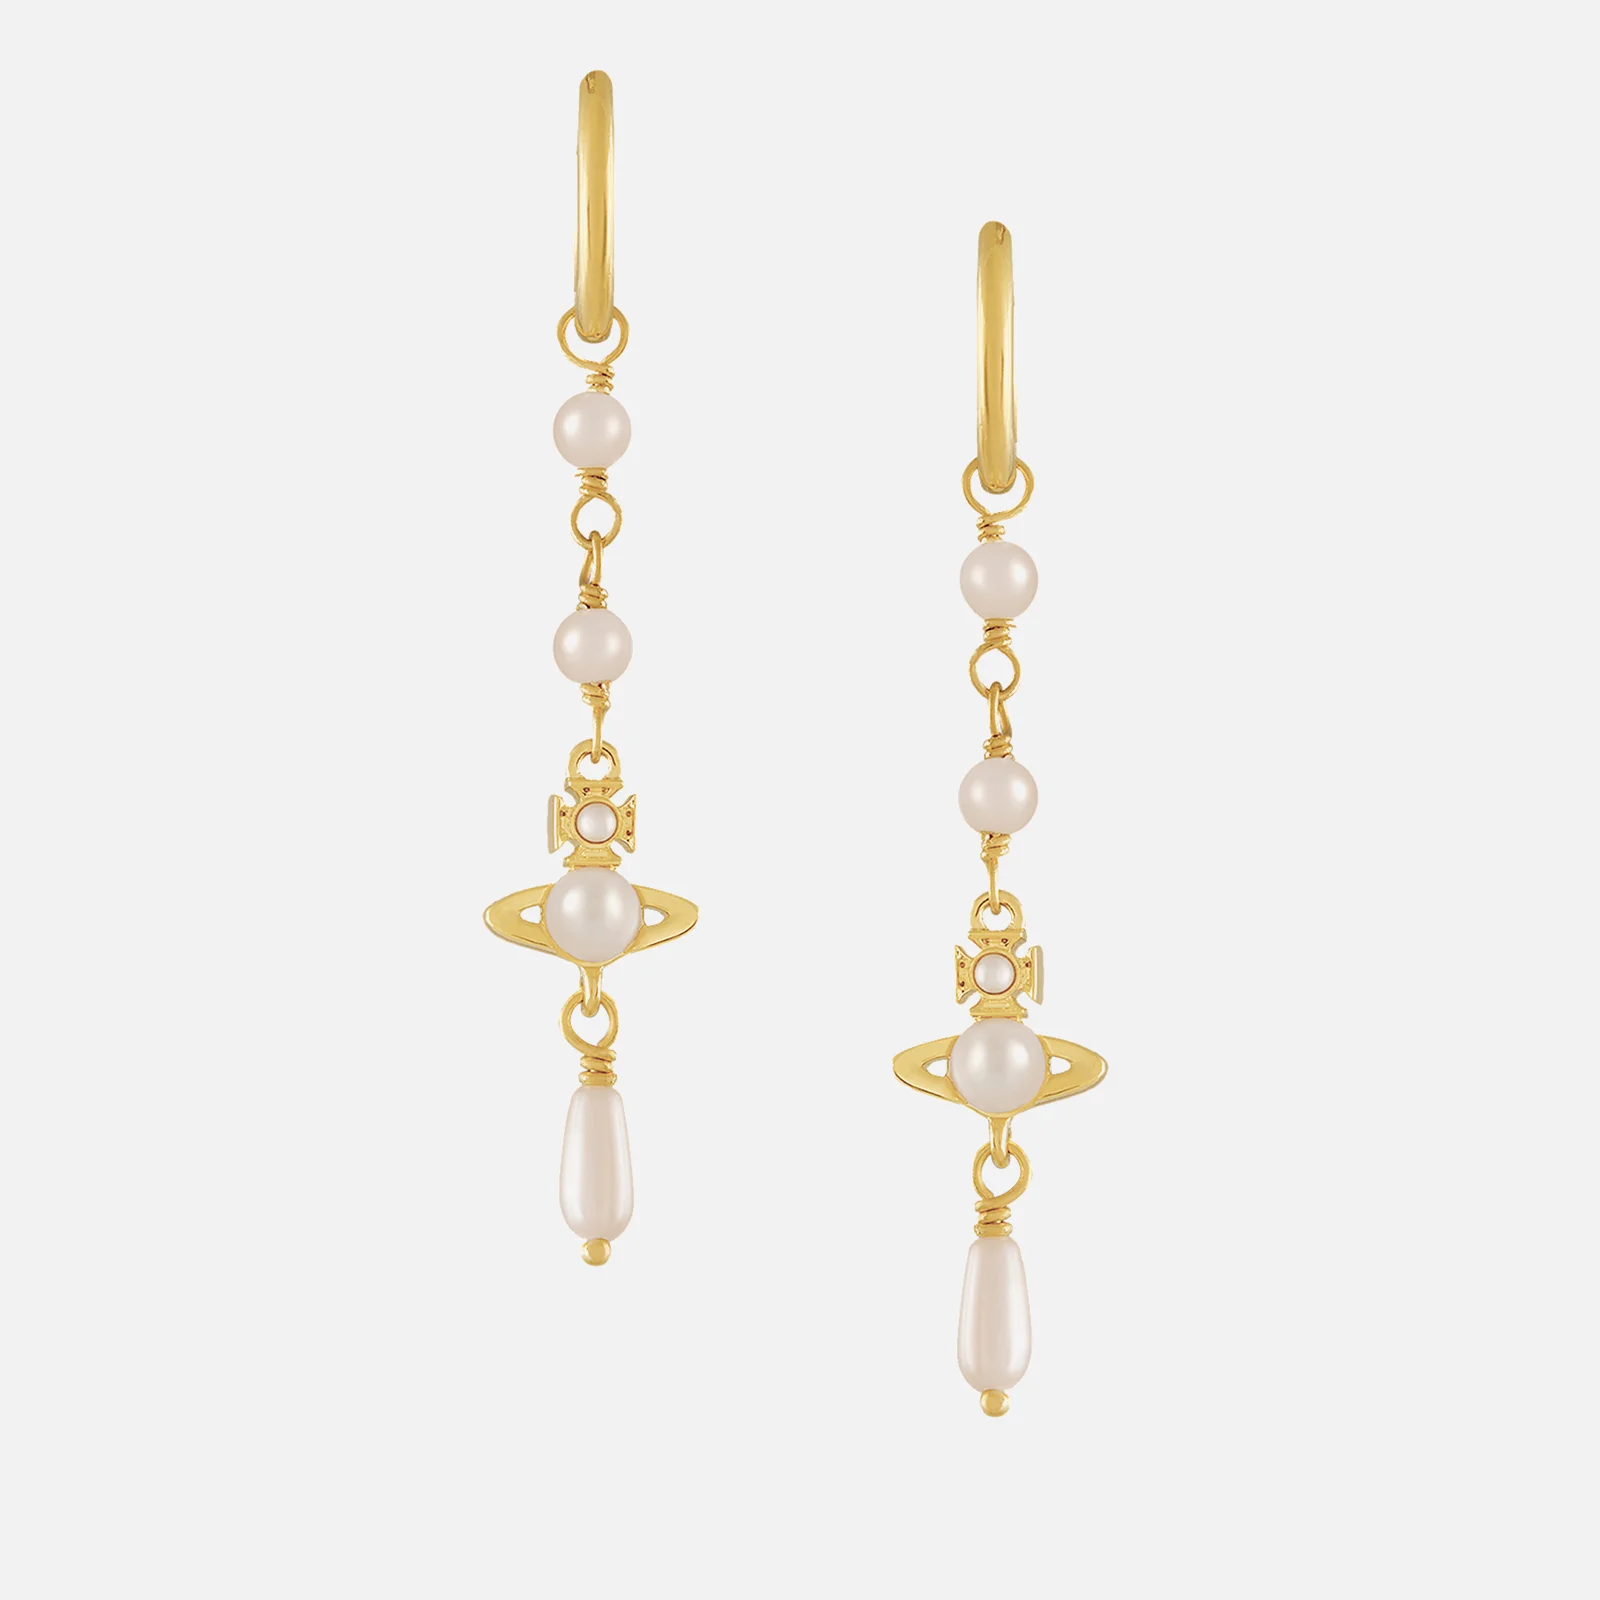 Vivienne Westwood Emiliana Pearl Gold-Tone Drop Earrings Image 1